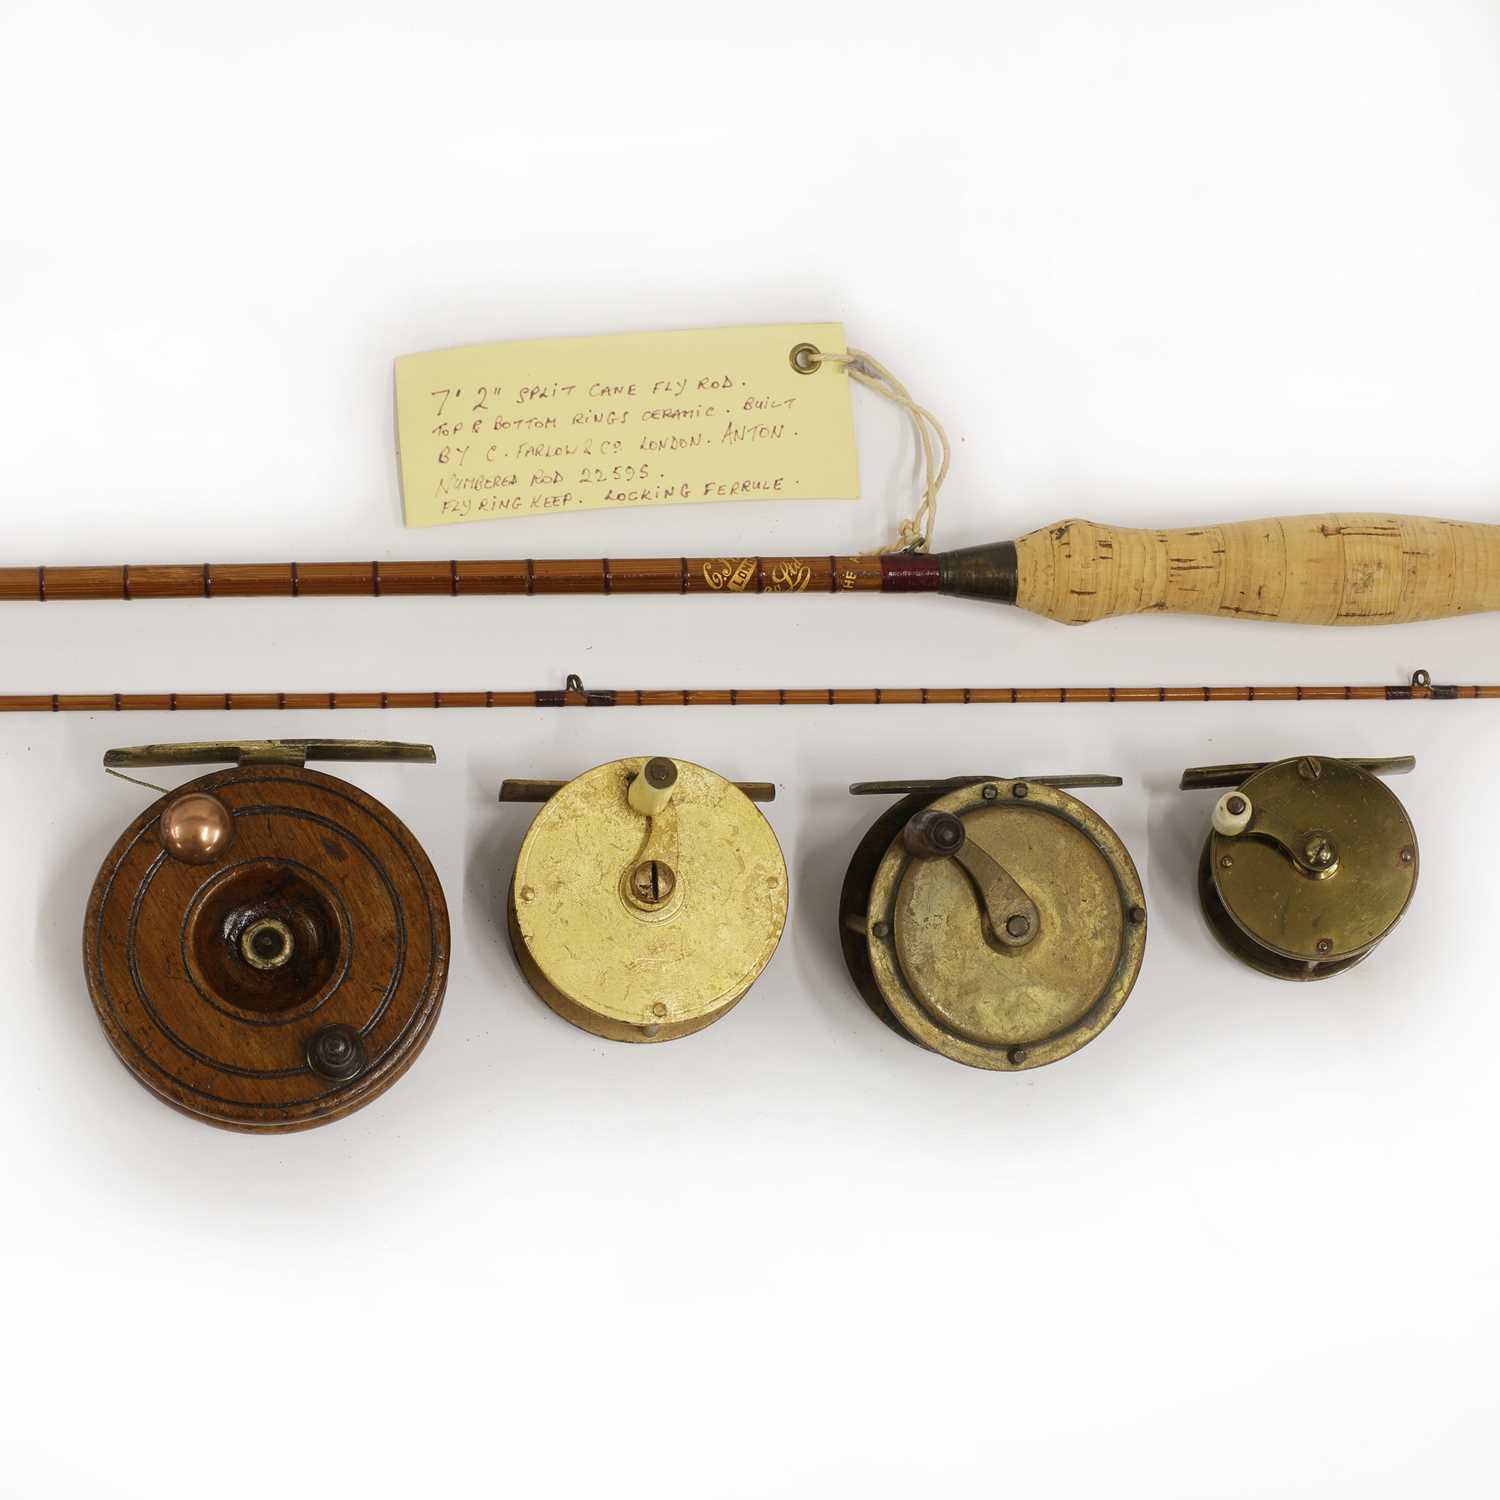 A Farlow & Co. London split cane fly fishing rod, - Image 2 of 3